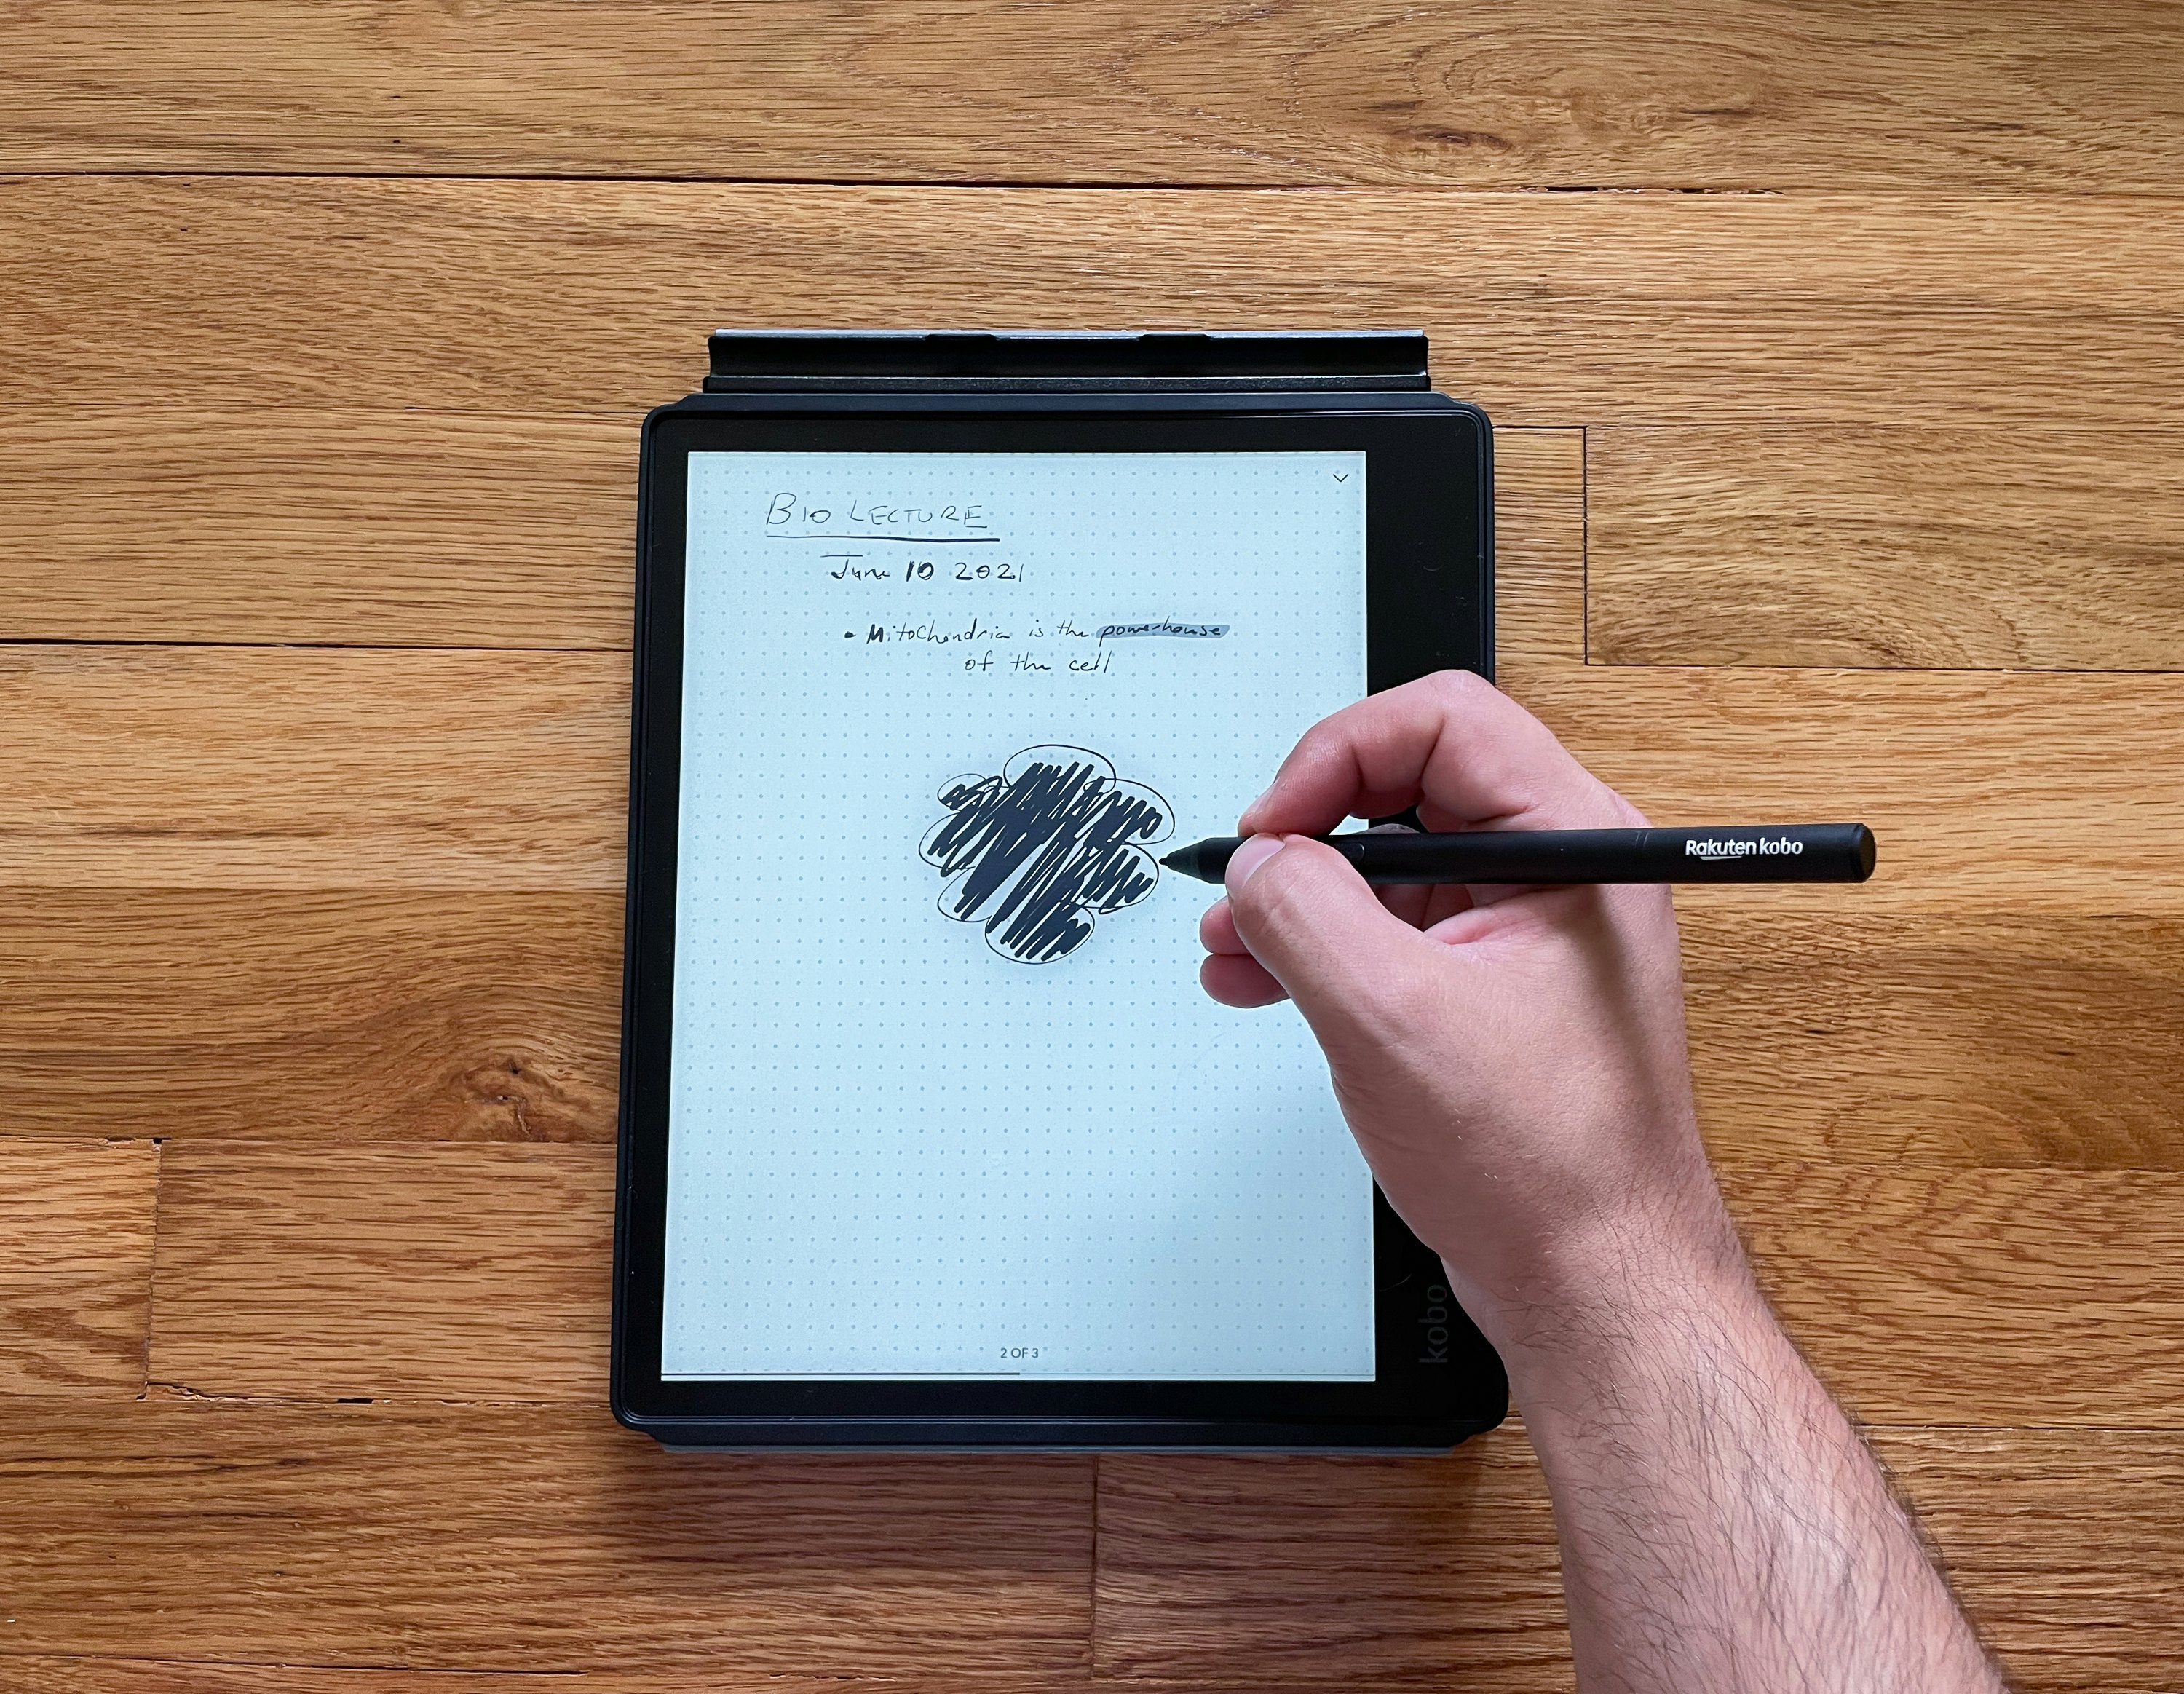 Kobo Nia 6 Digital eReader [ E Ink Carta Touch Screen ] NEW